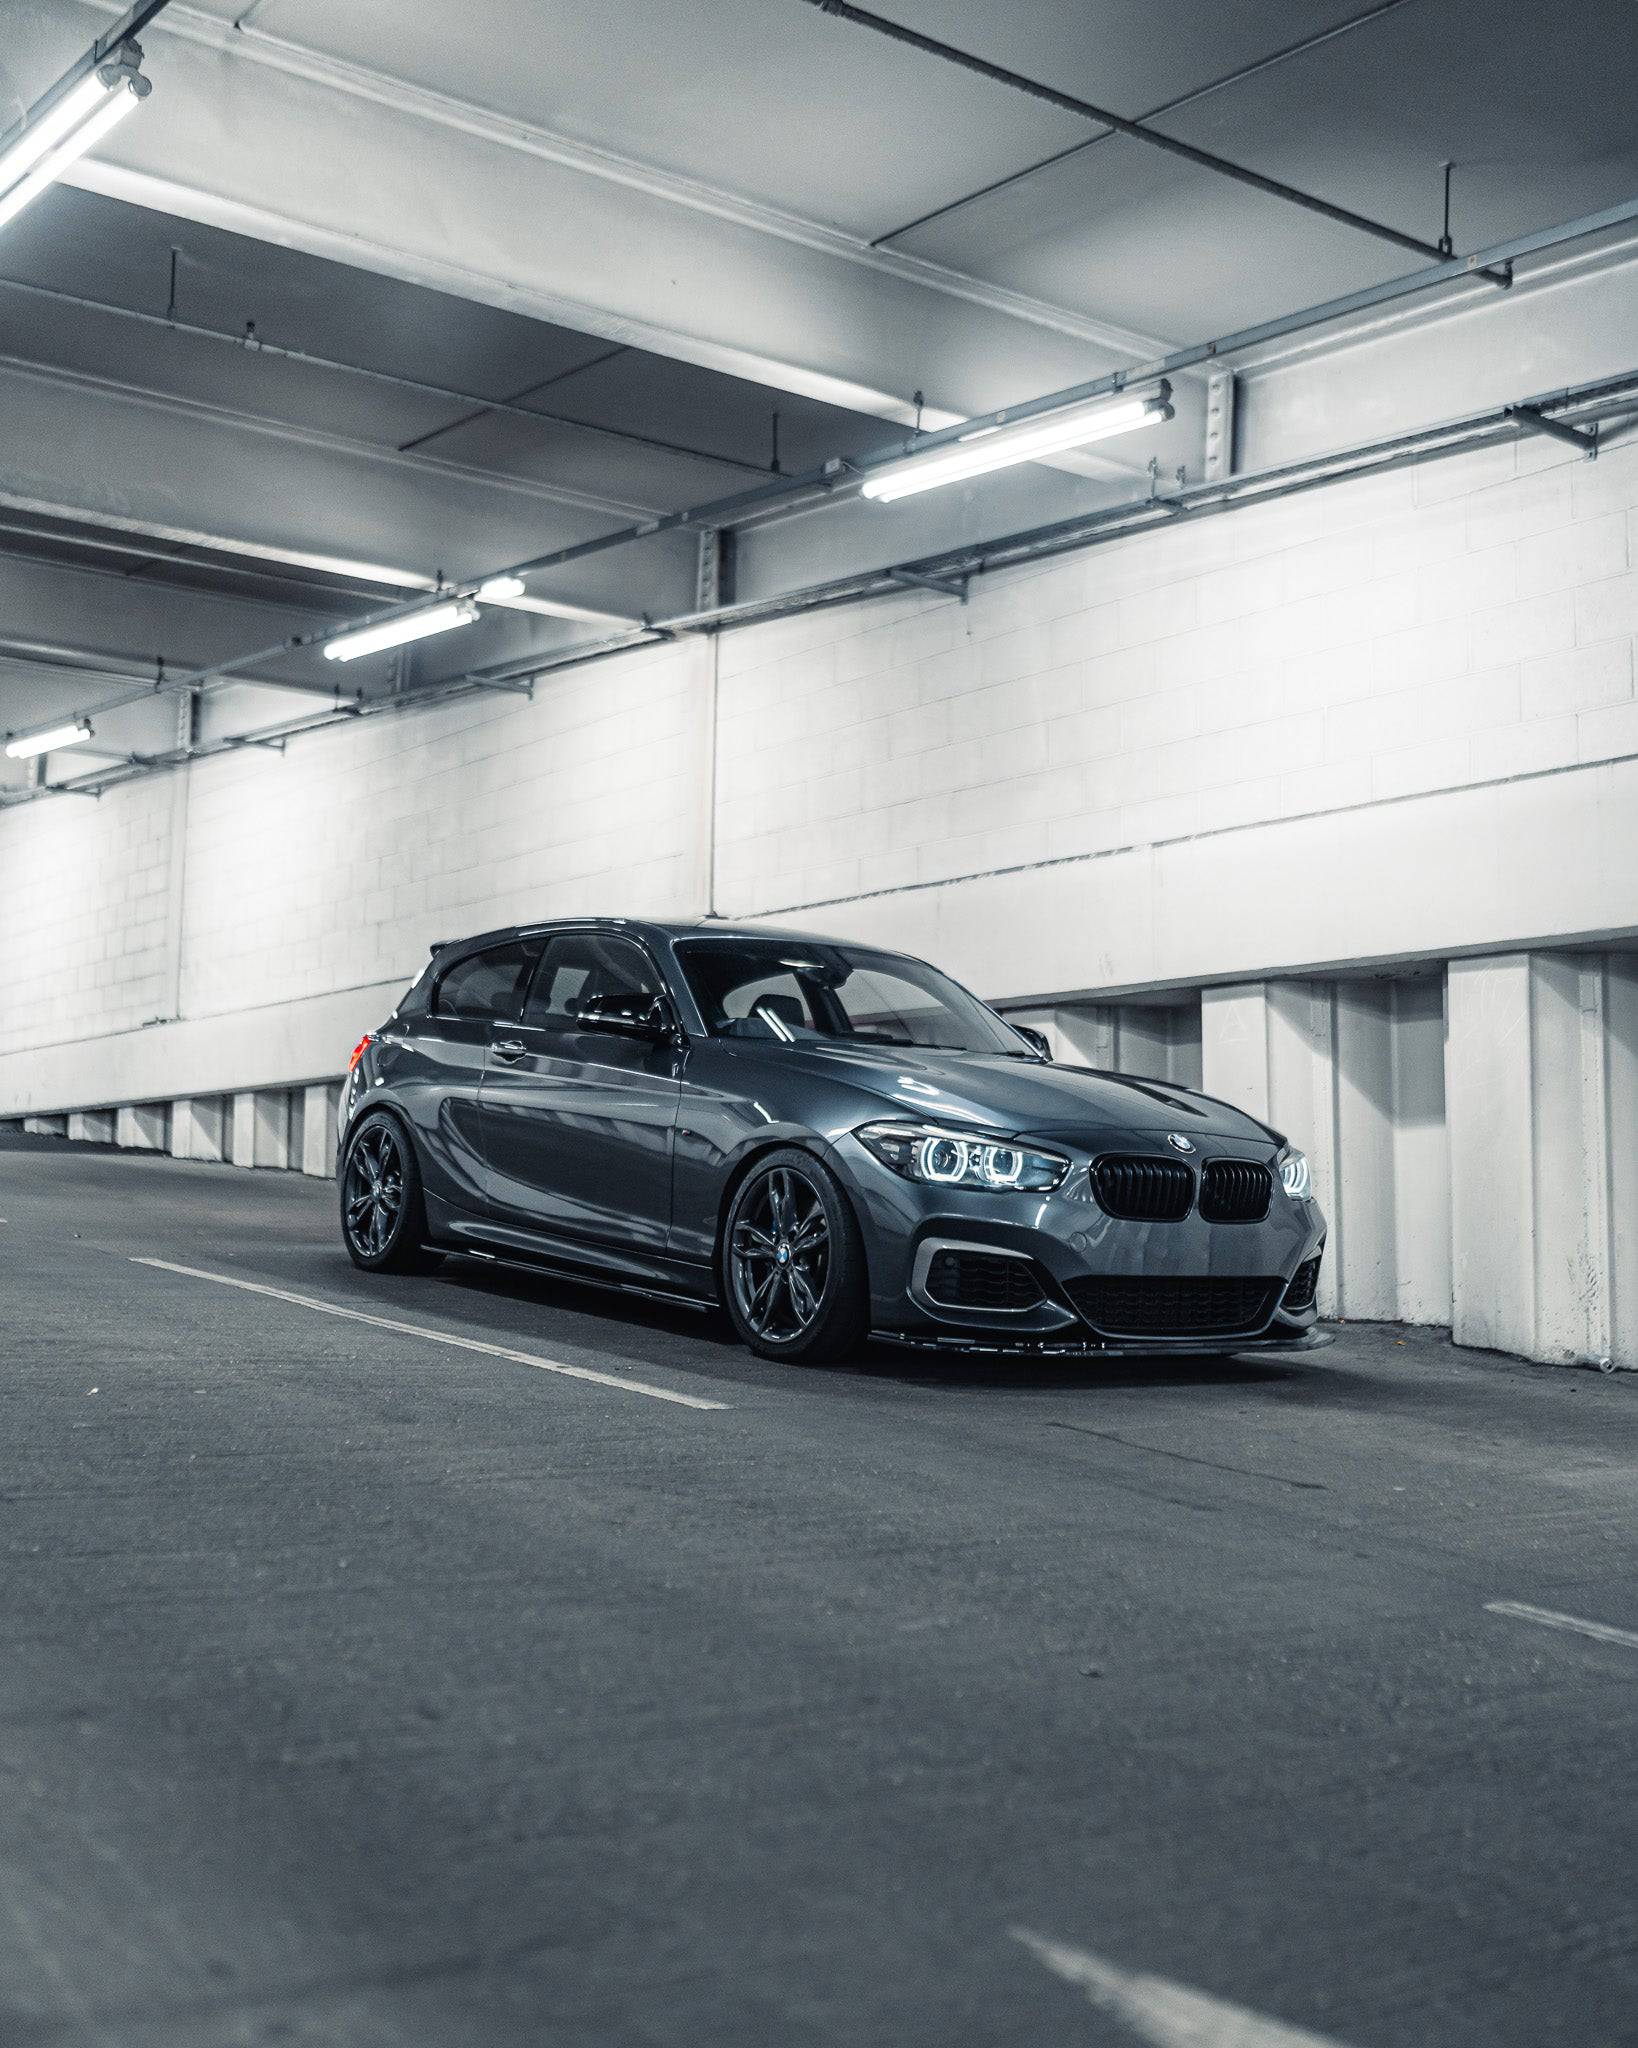 BMW 1 Series M135i & M140i F20 F21 LCI Gloss Black Body Kit by ZAERO (2015-2019), Styling Kit, Zaero Design - AUTOID | Premium Automotive Accessories